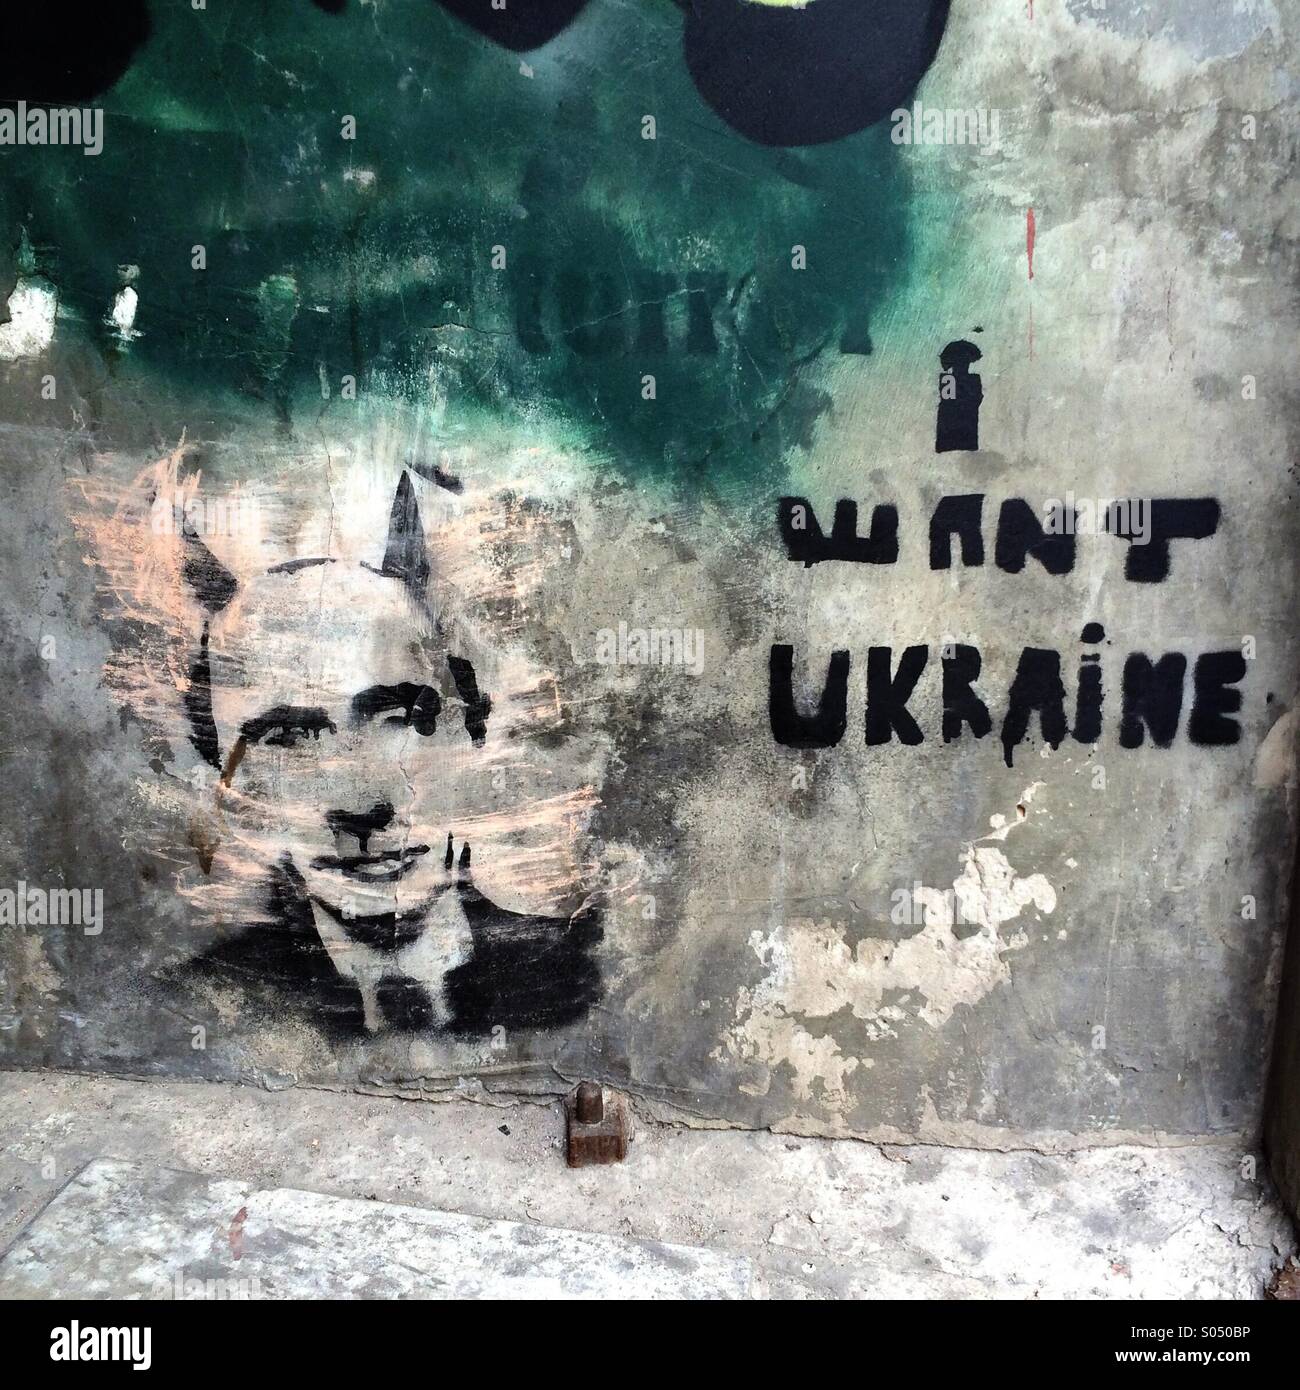 Graffiti regarding Ukraine crisis on wall in Riga, Latvia Stock Photo